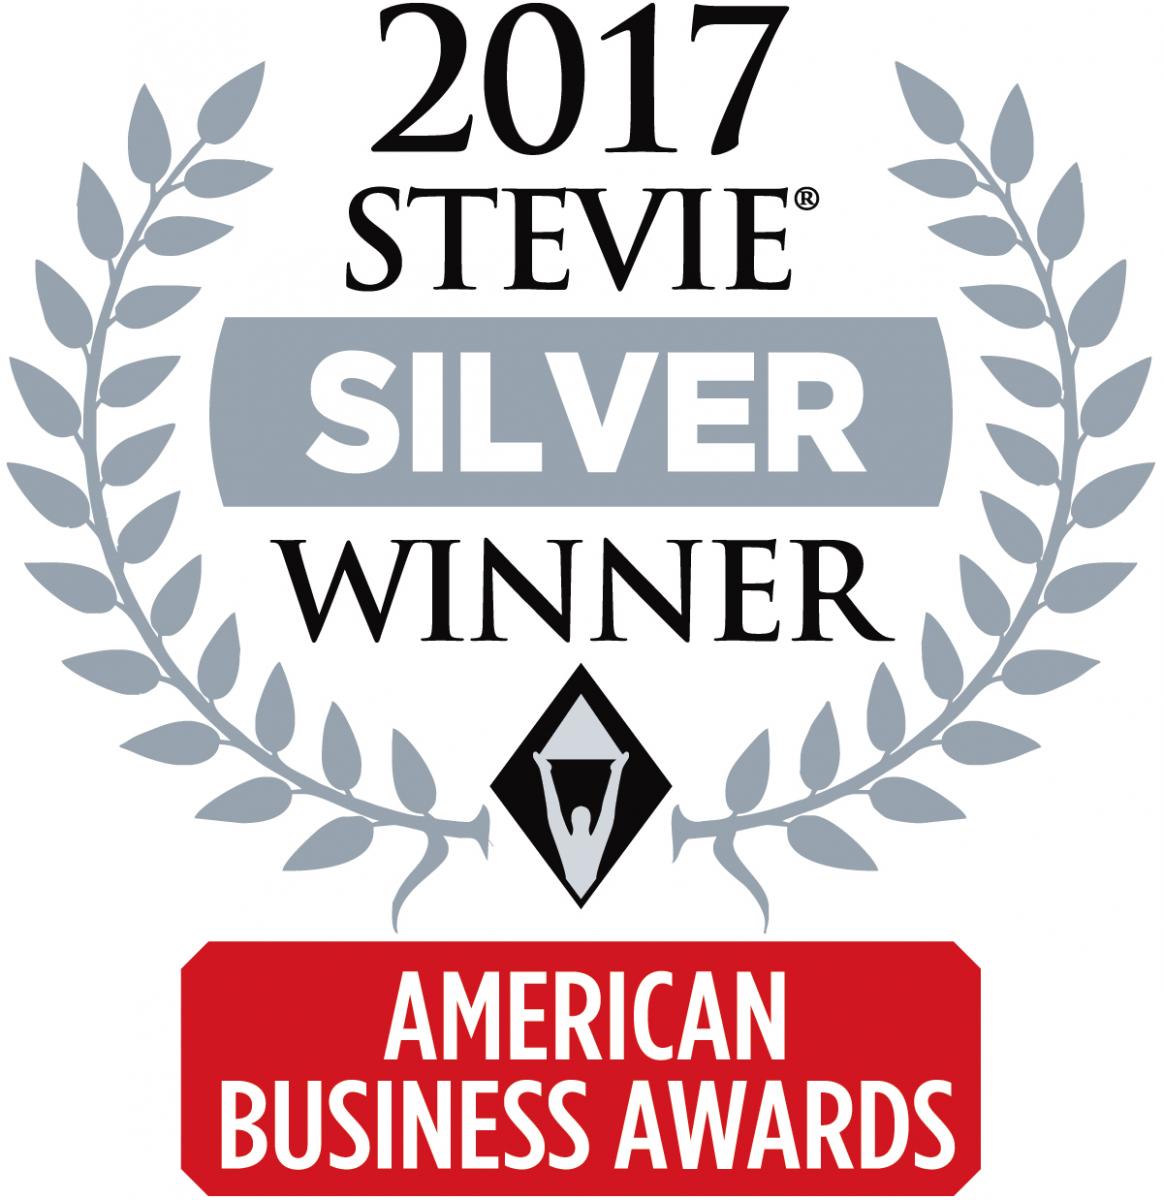 ORIONVM HONORED AS SILVER STEVIE AWARD WINNER IN 2017 AMERICAN